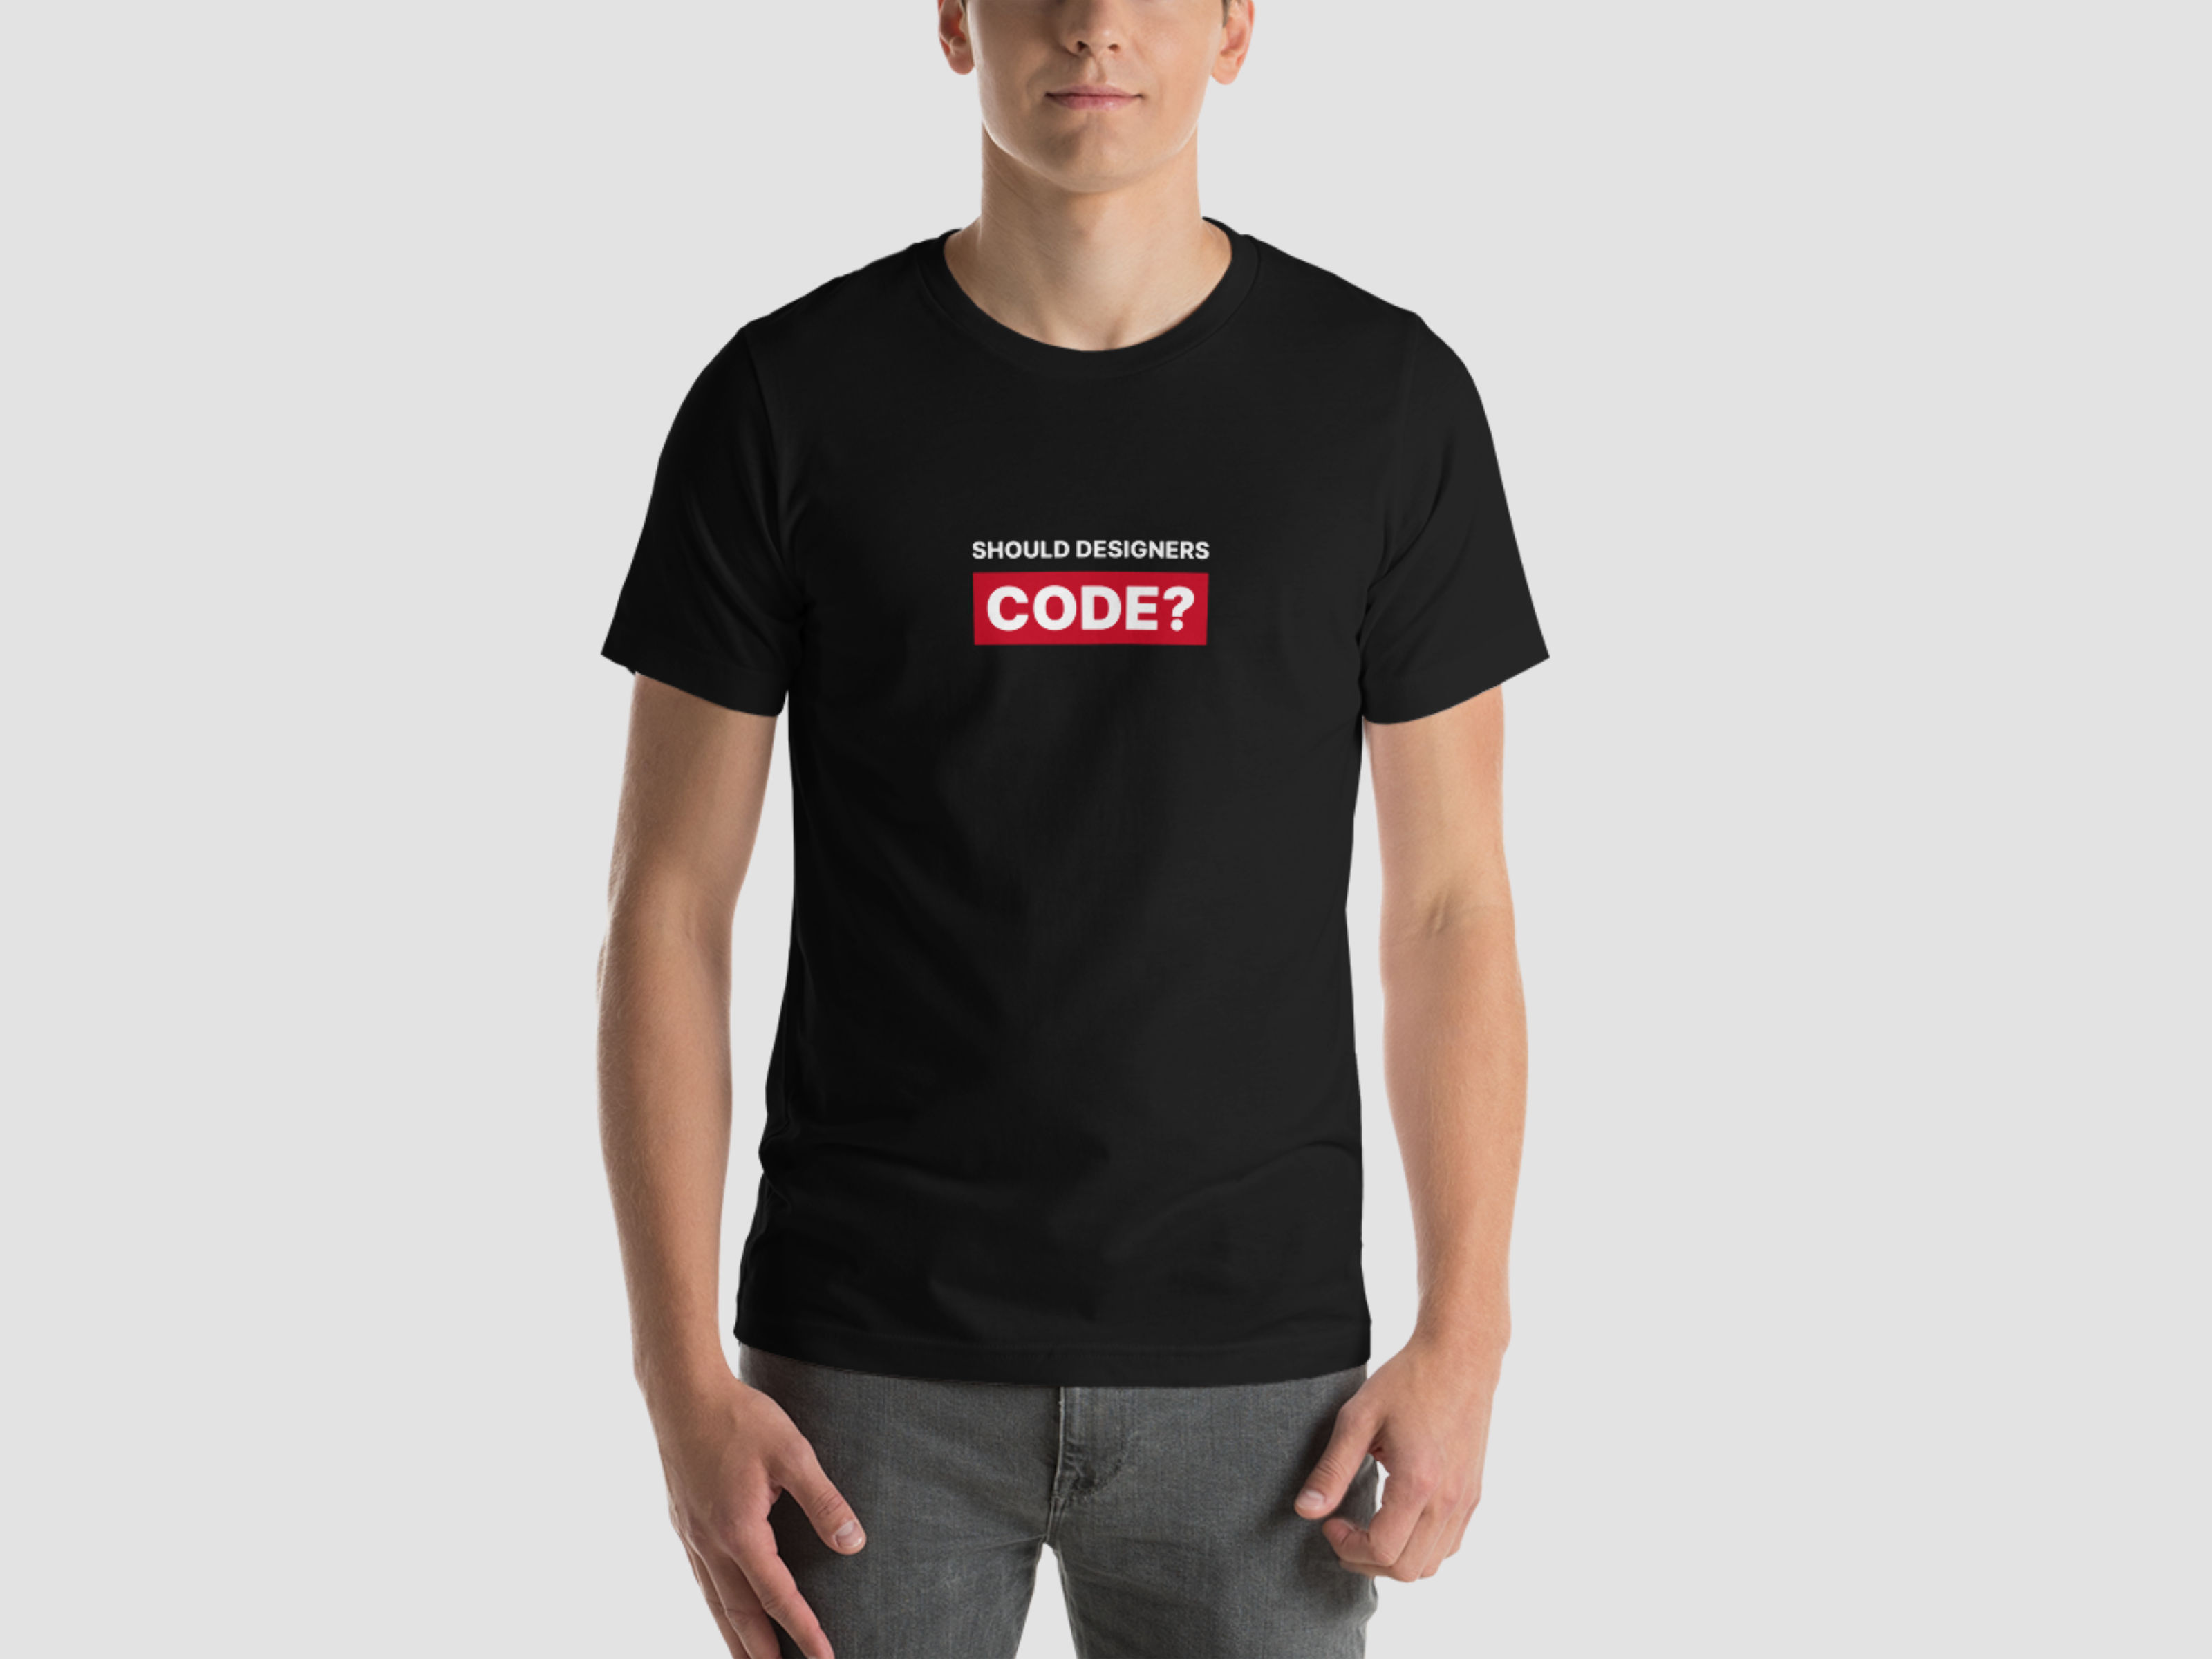 Should Designers Code? – T-Shirt